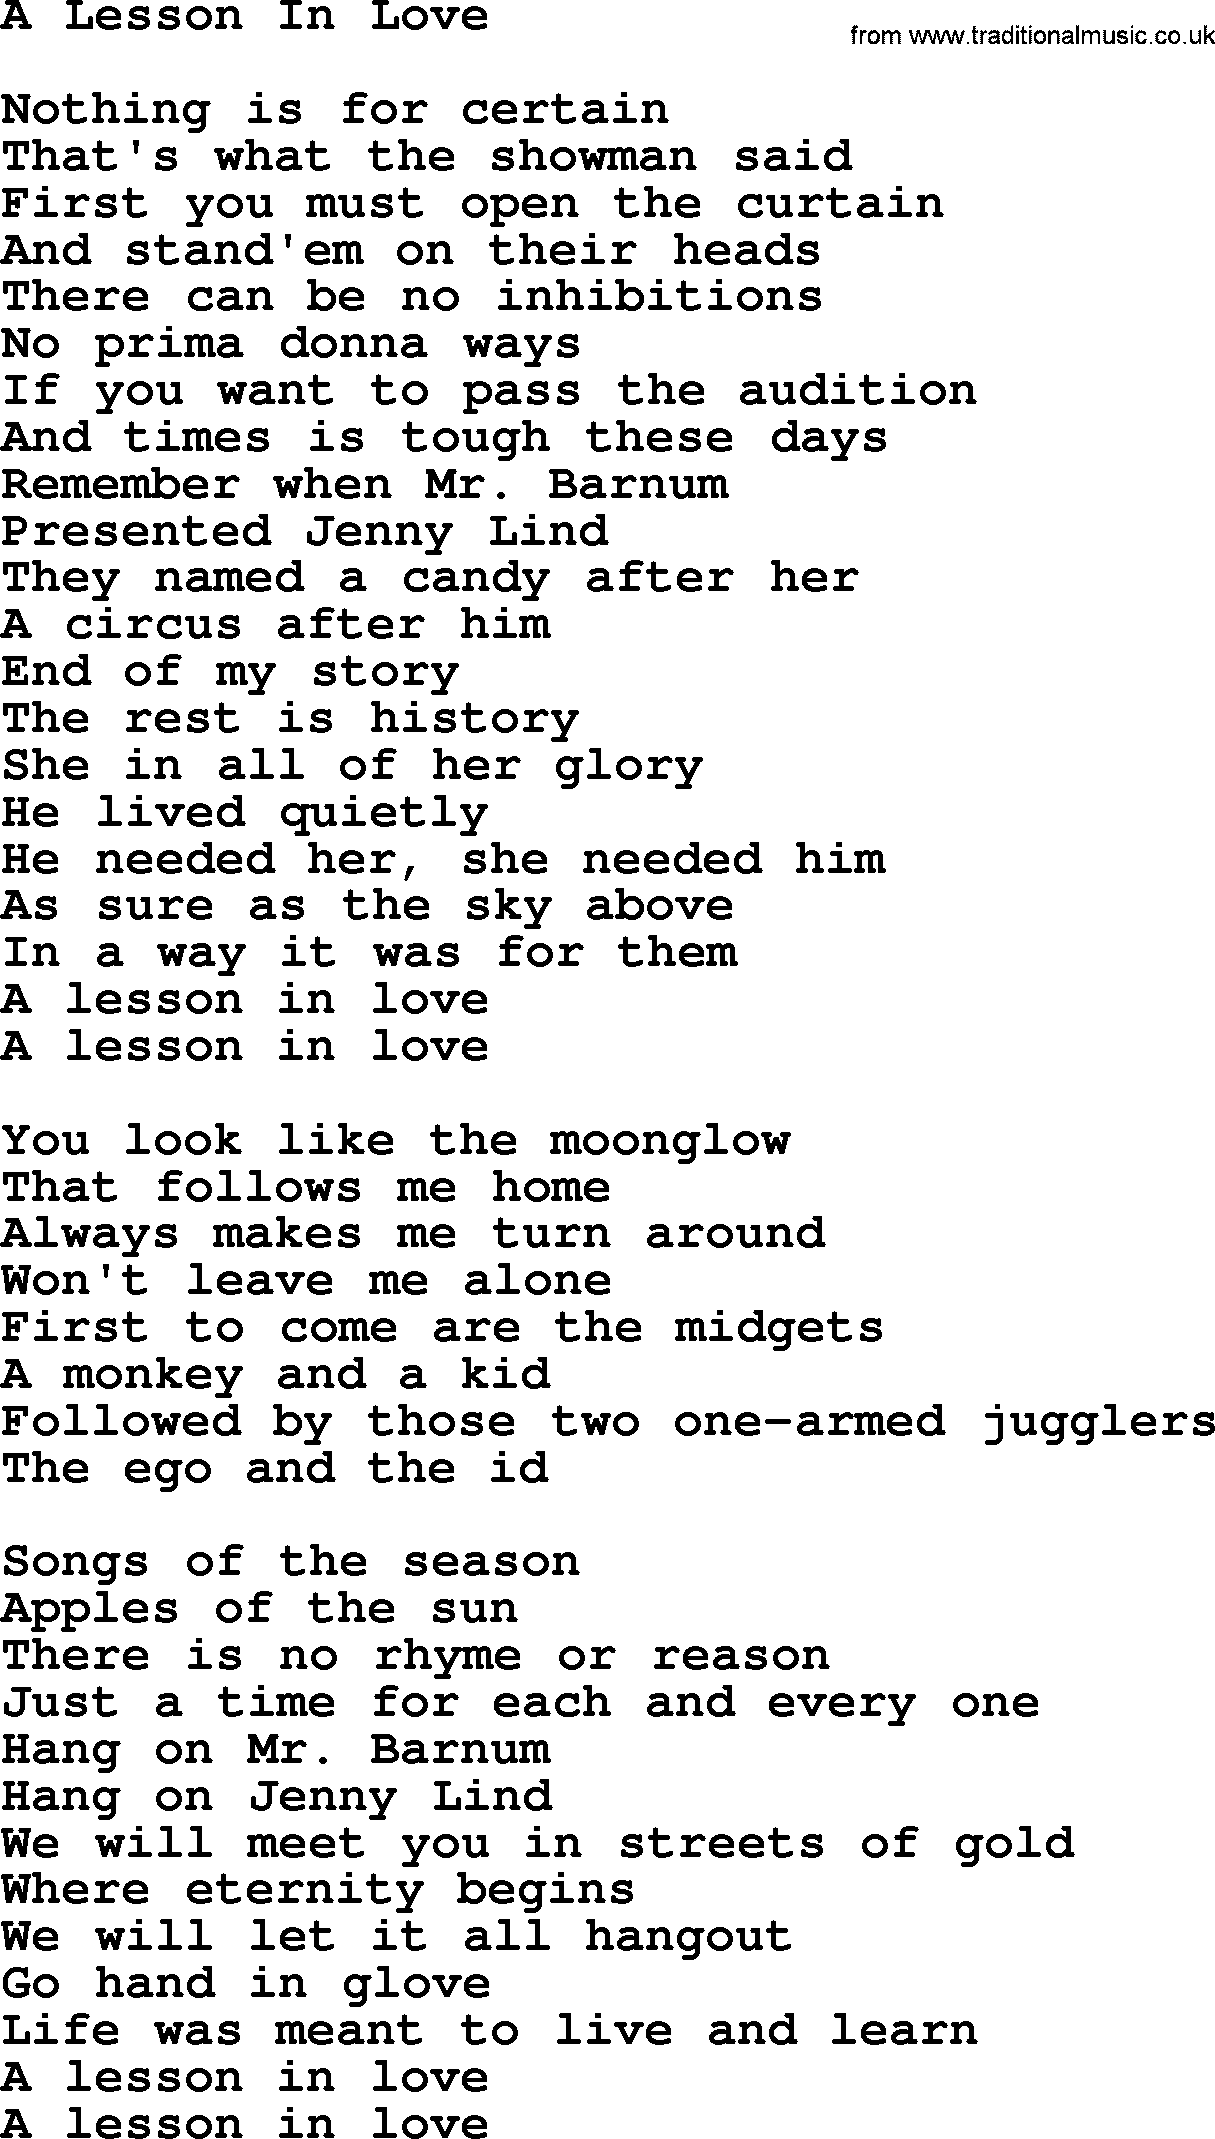 Gordon Lightfoot song A Lesson In Love, lyrics